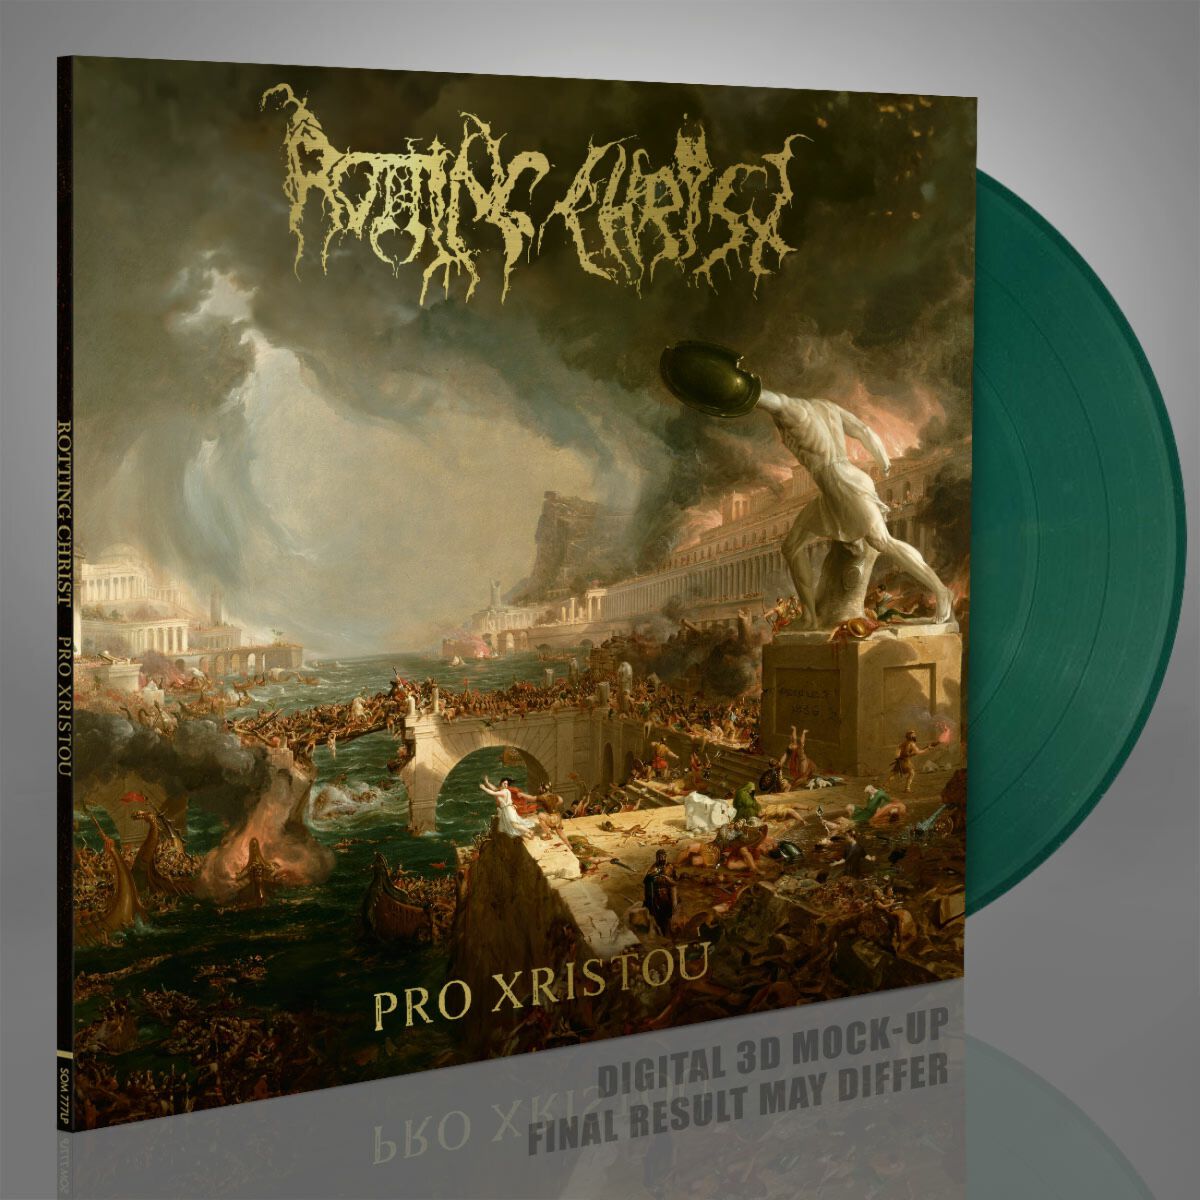 Pro Xristou von Rotting Christ - LP (Coloured, Limited Edition, Standard)